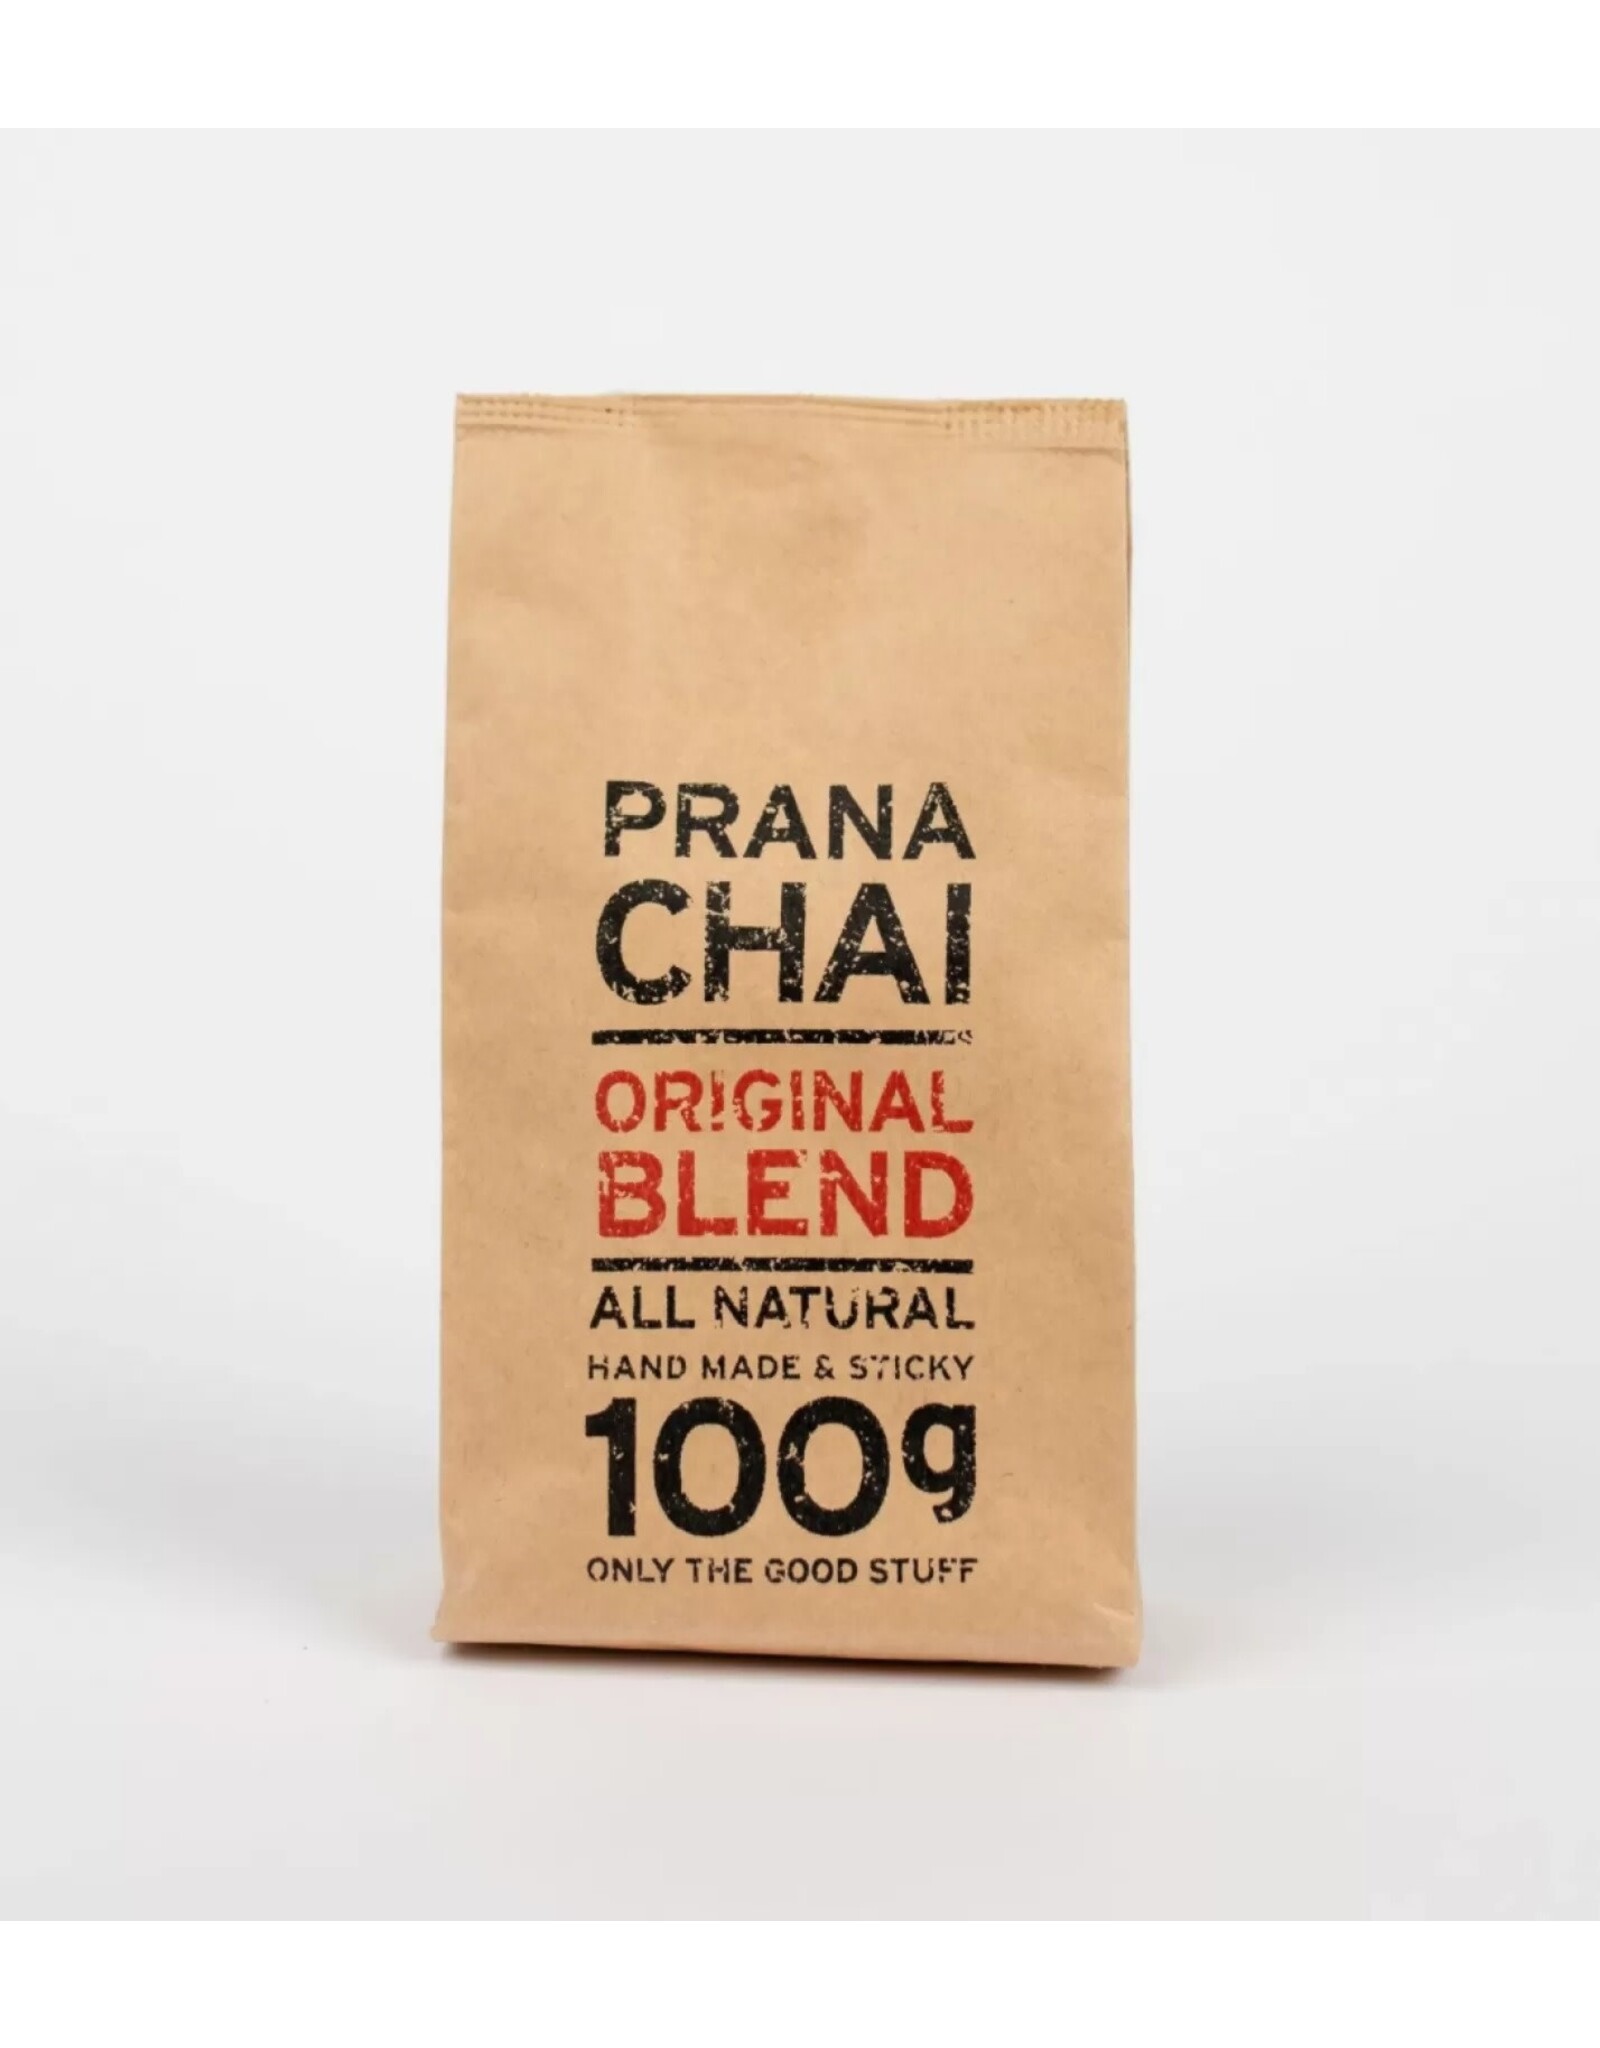 Prana Original Blend Chai 100g